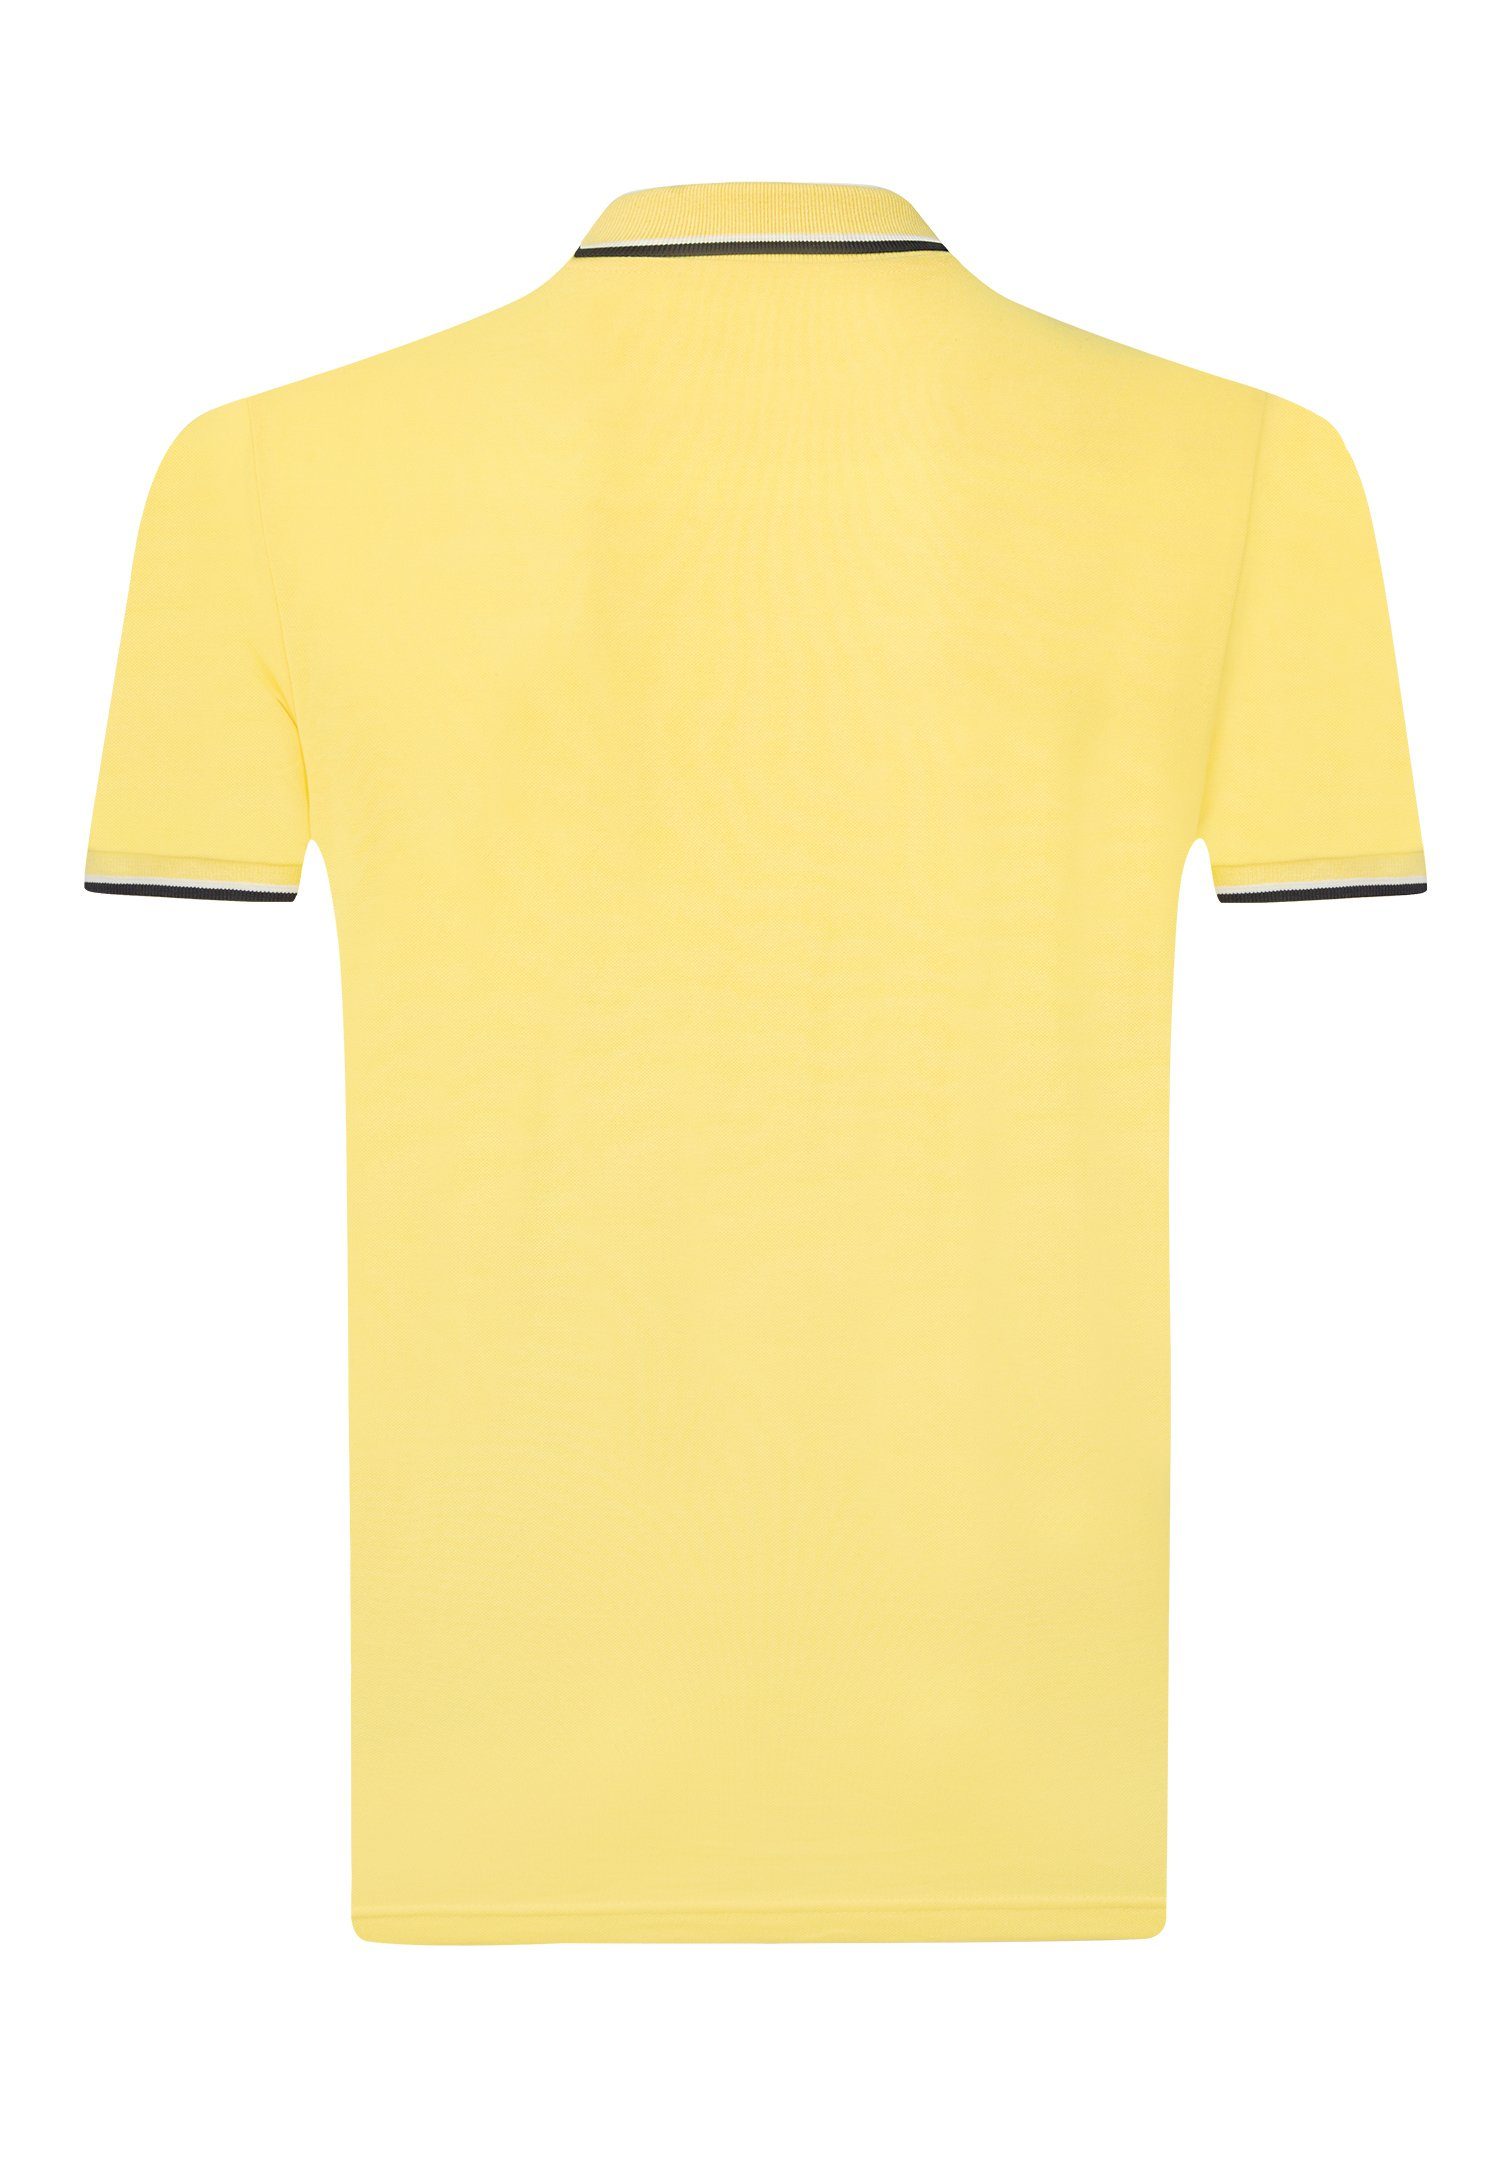 Yellow Poloshirt Sir Marcus Raymond Tailor